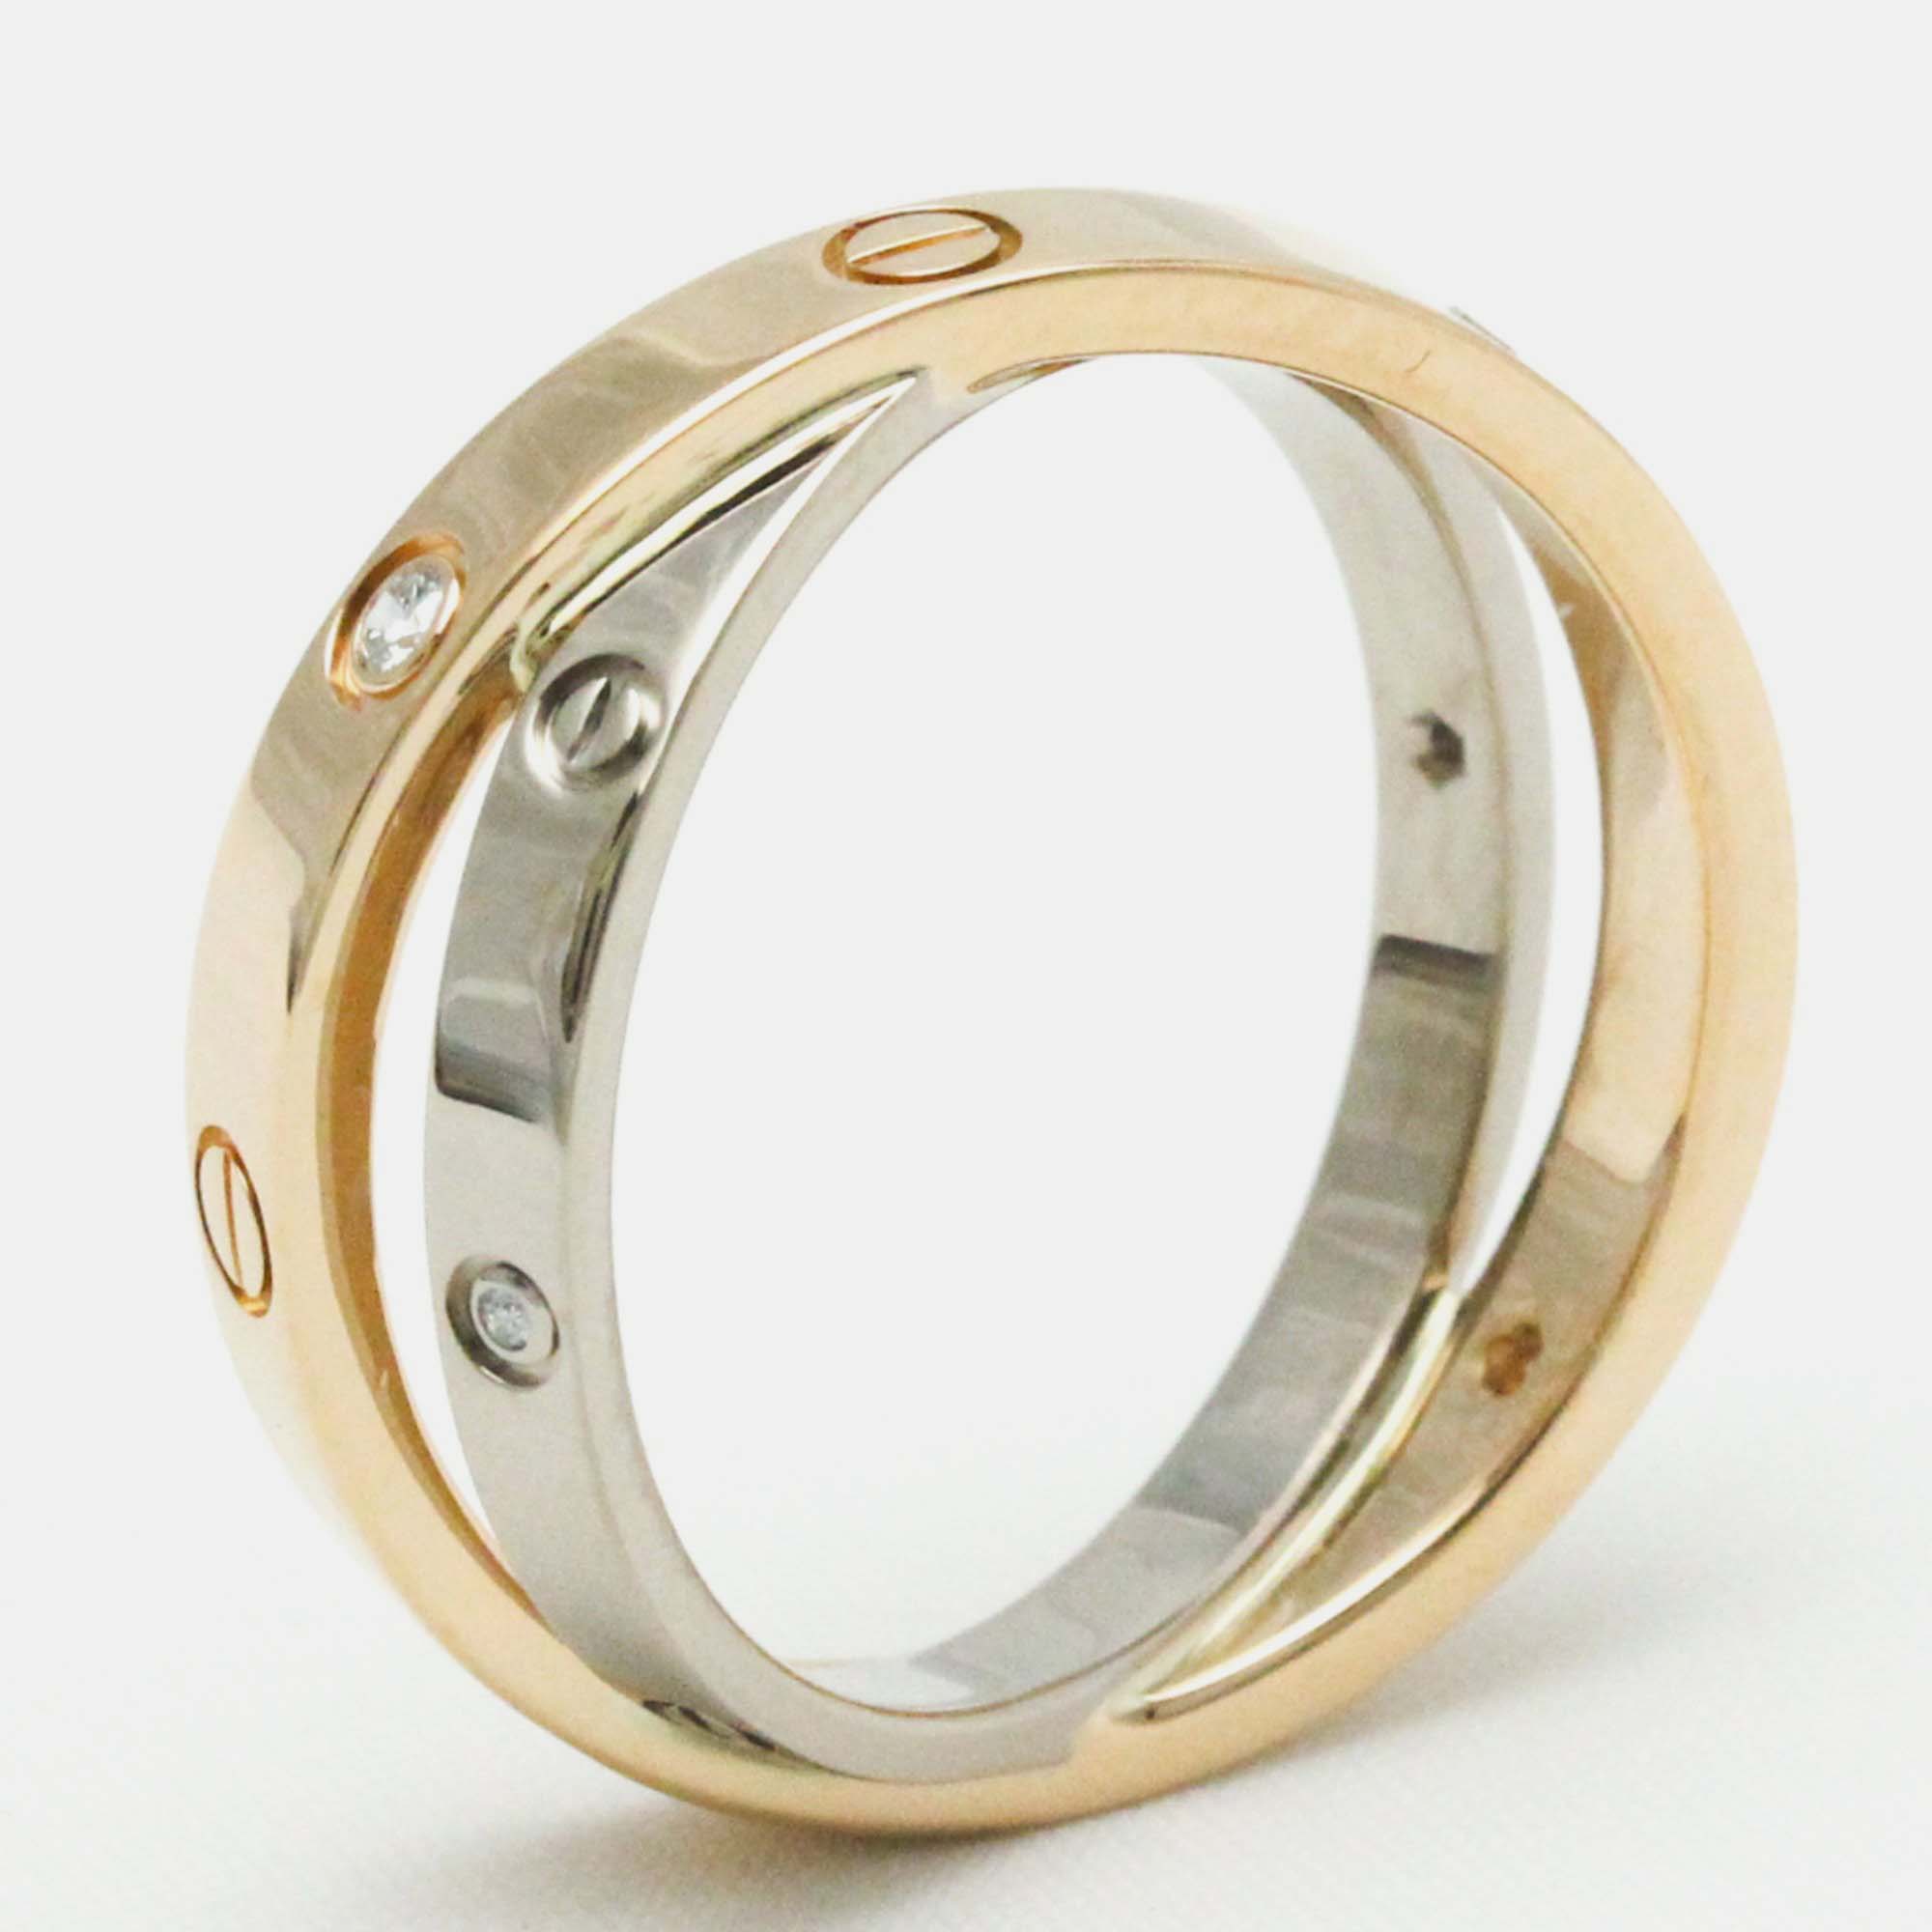 Cartier Love Me 18K Rose White Gold Diamond Ring EU 56